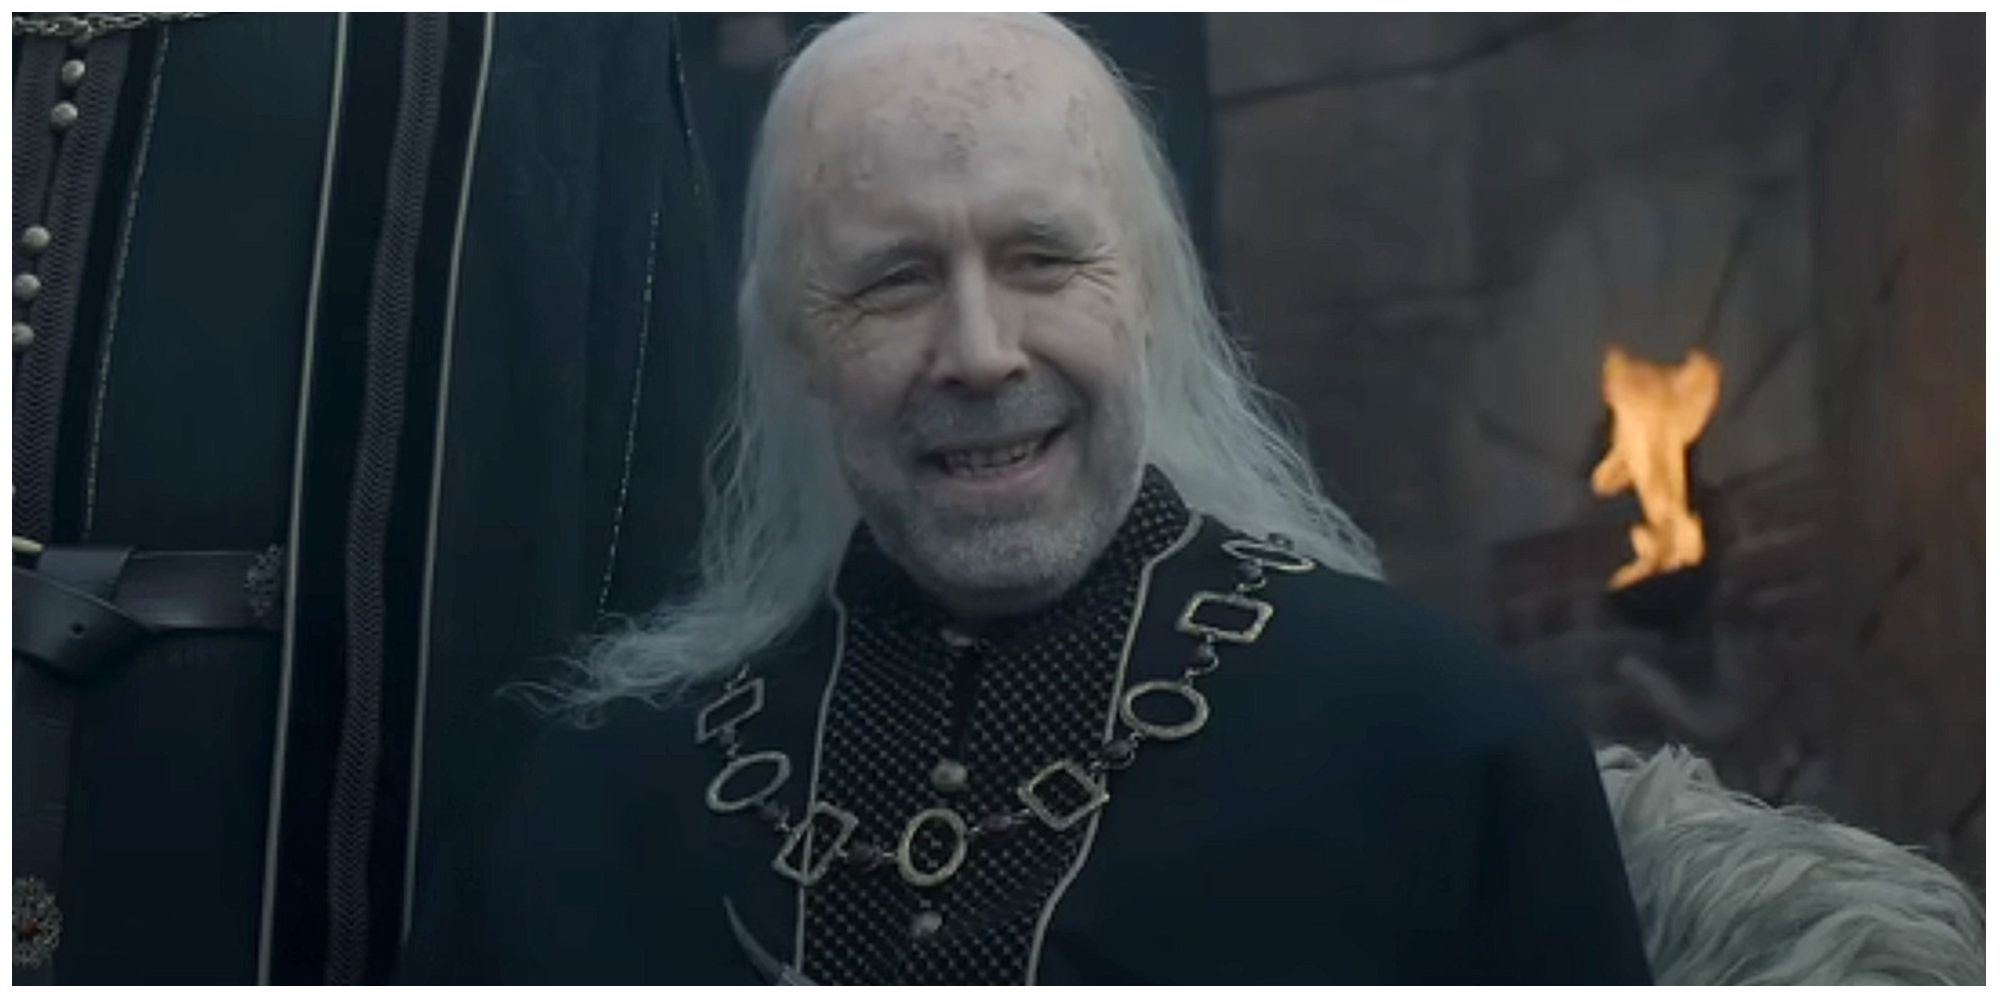 An old Viserys Targaryen smiling in House of the Dragon